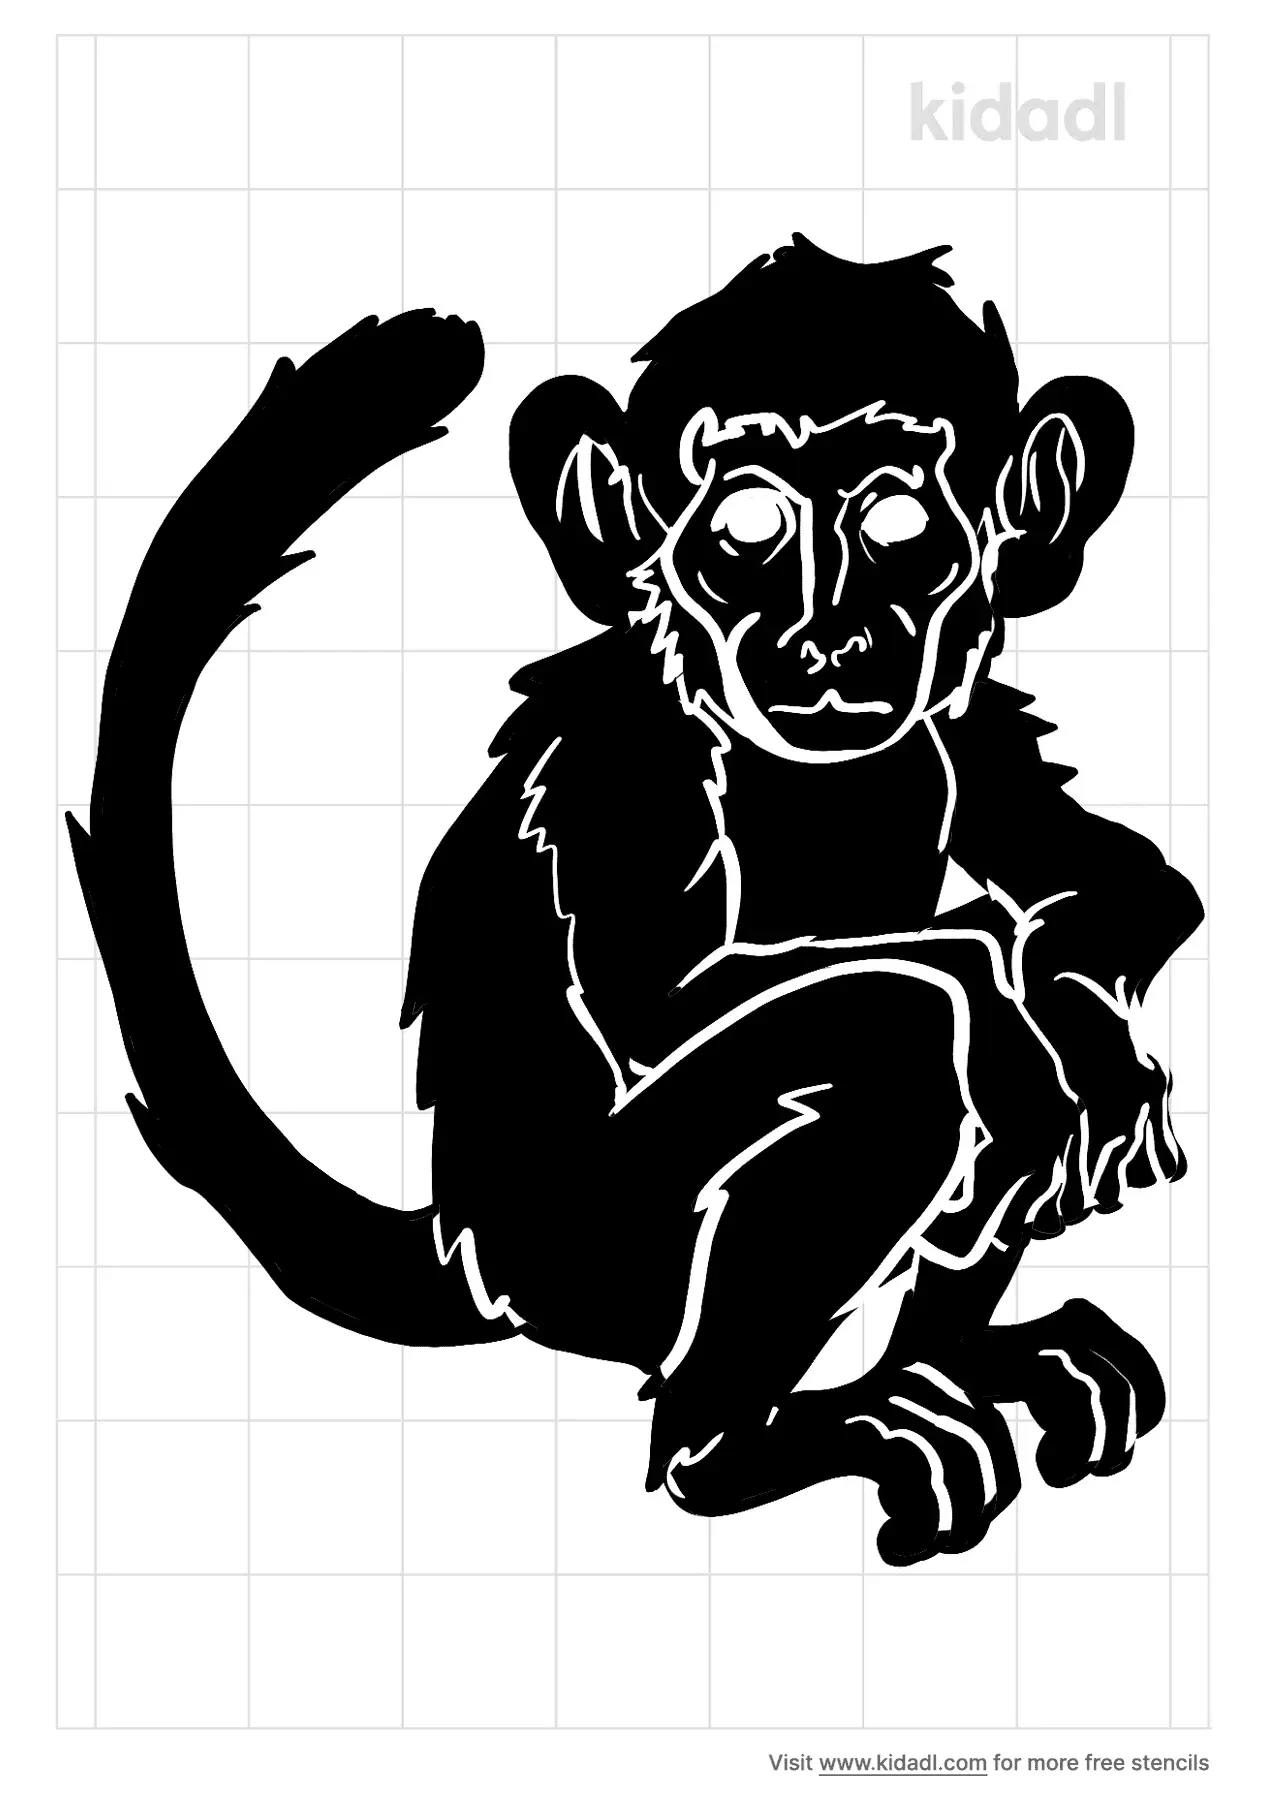 Free Monkey Stencil | Stencil Printables | Kidadl